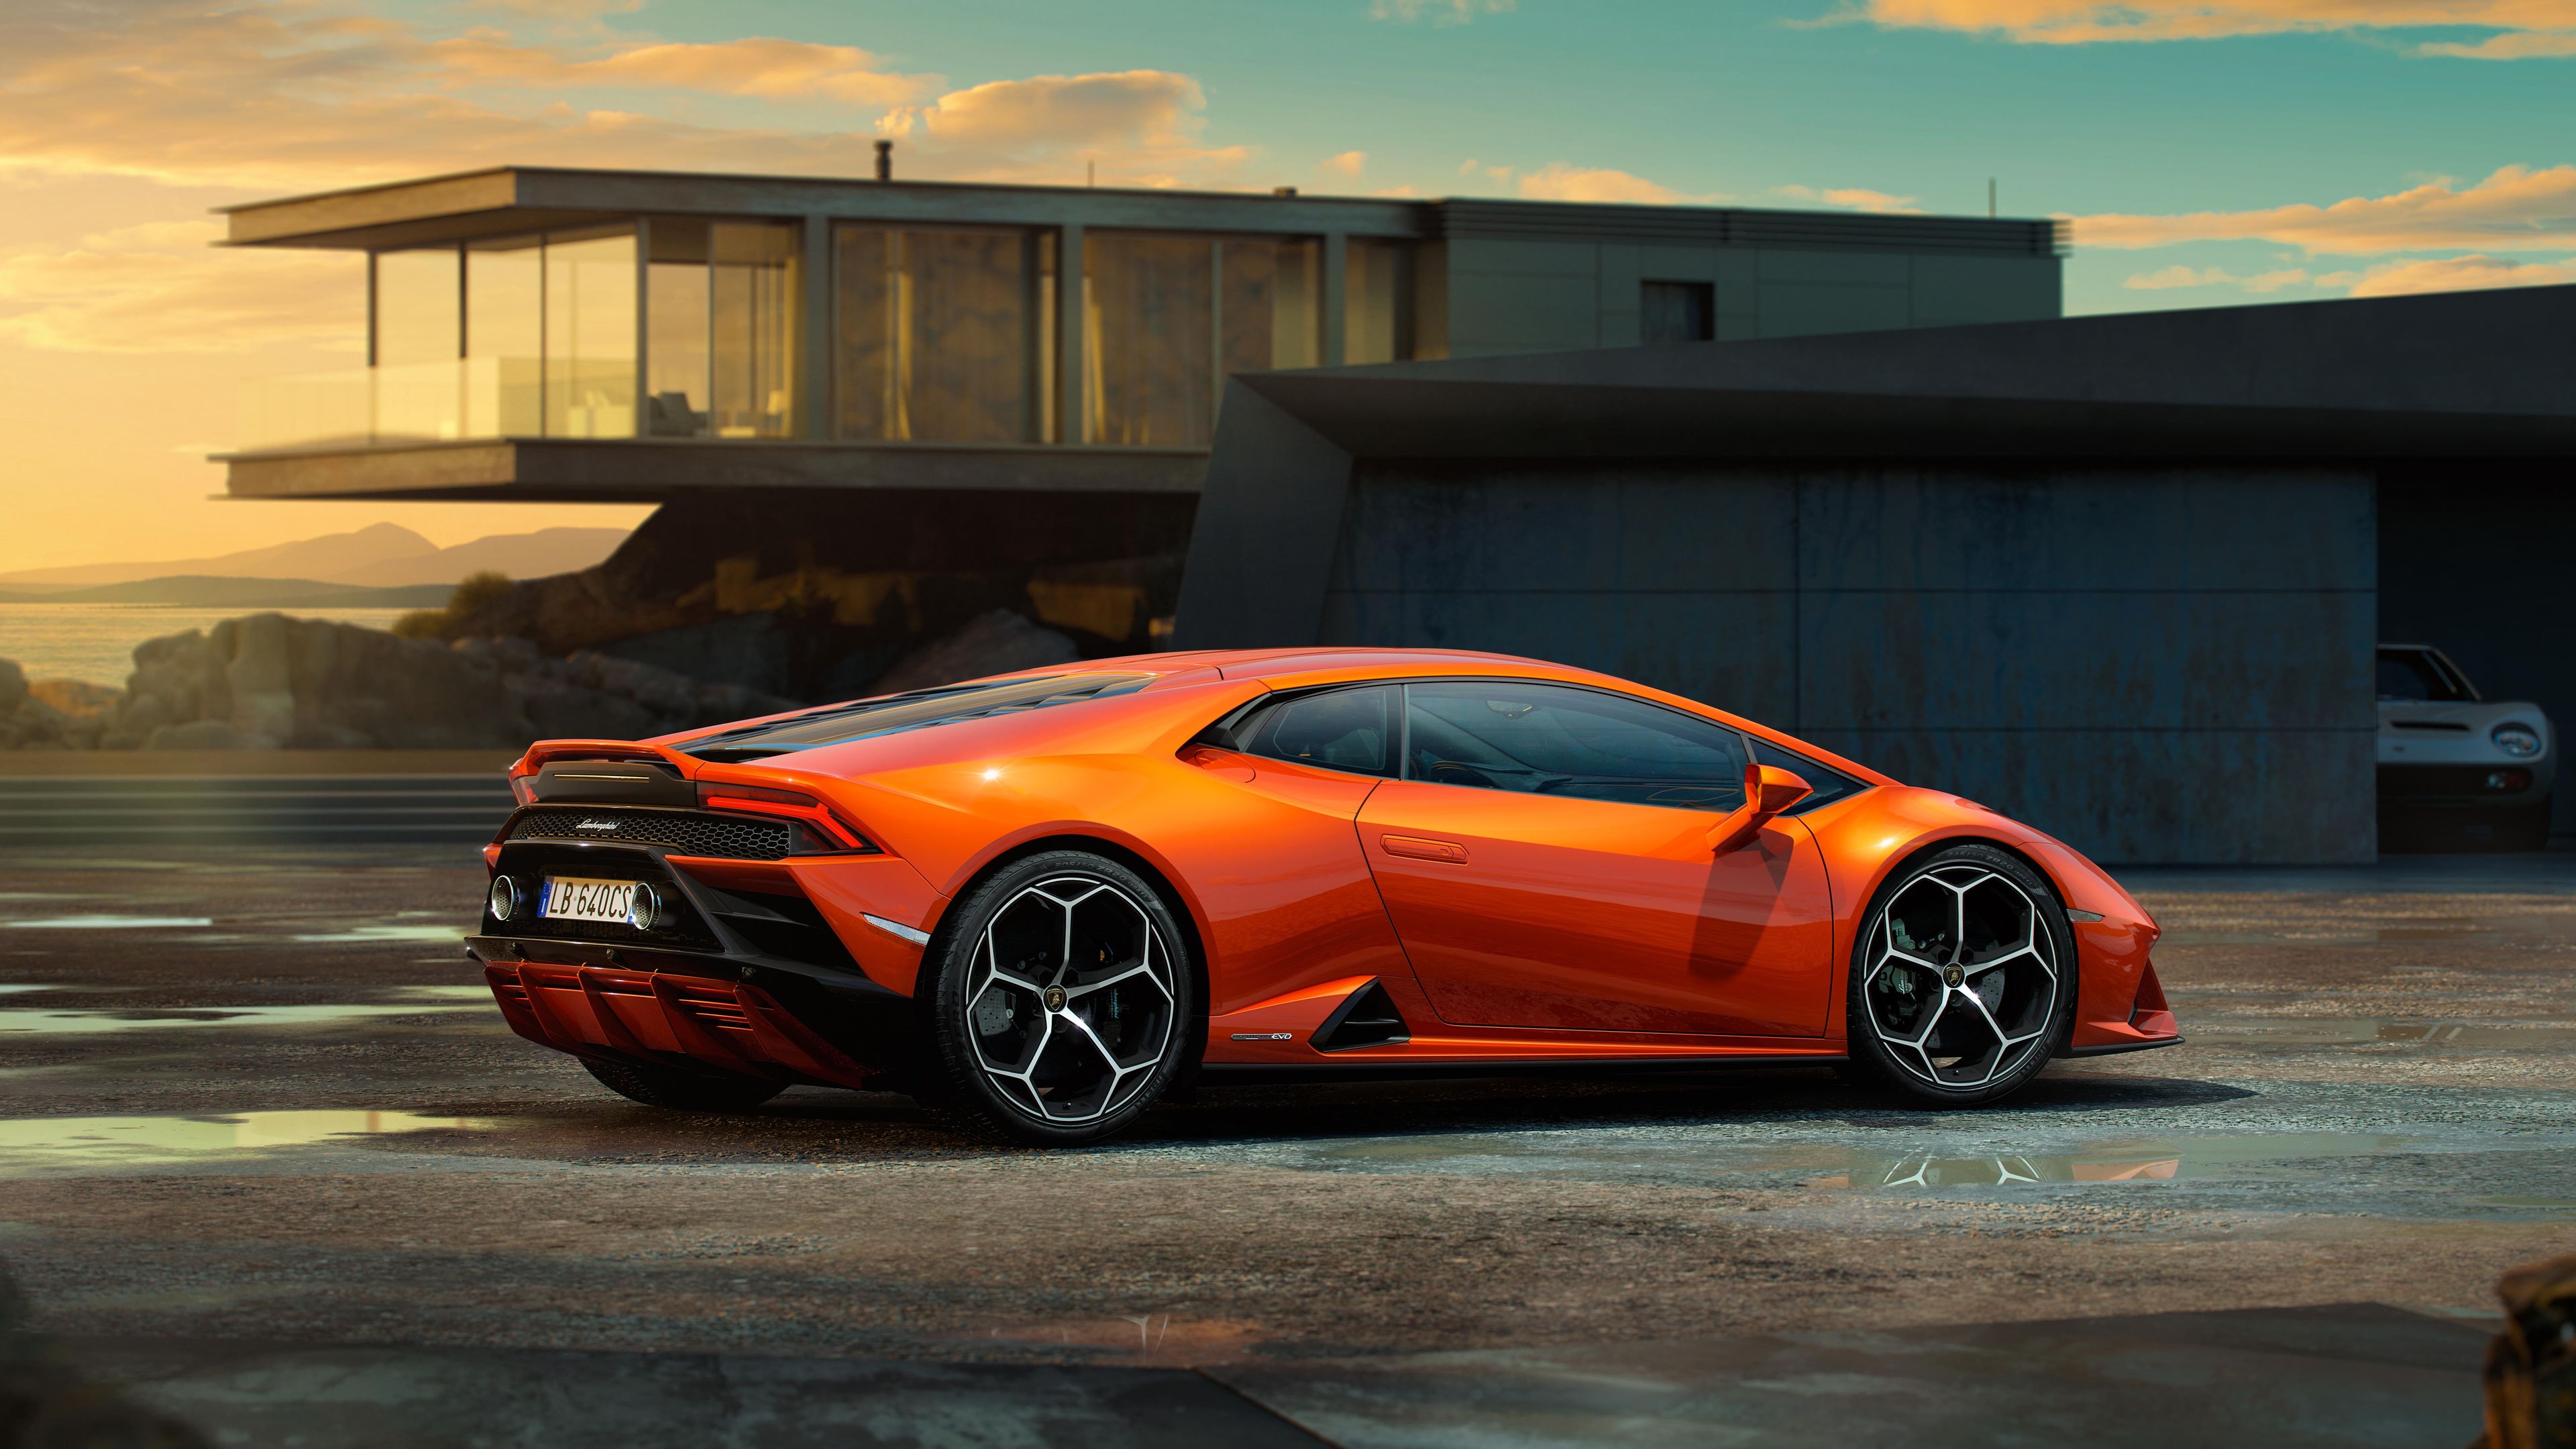 2019 Lamborghini Huracan Evo Picture - Lamborghini Huracan Evo Spyder , HD Wallpaper & Backgrounds